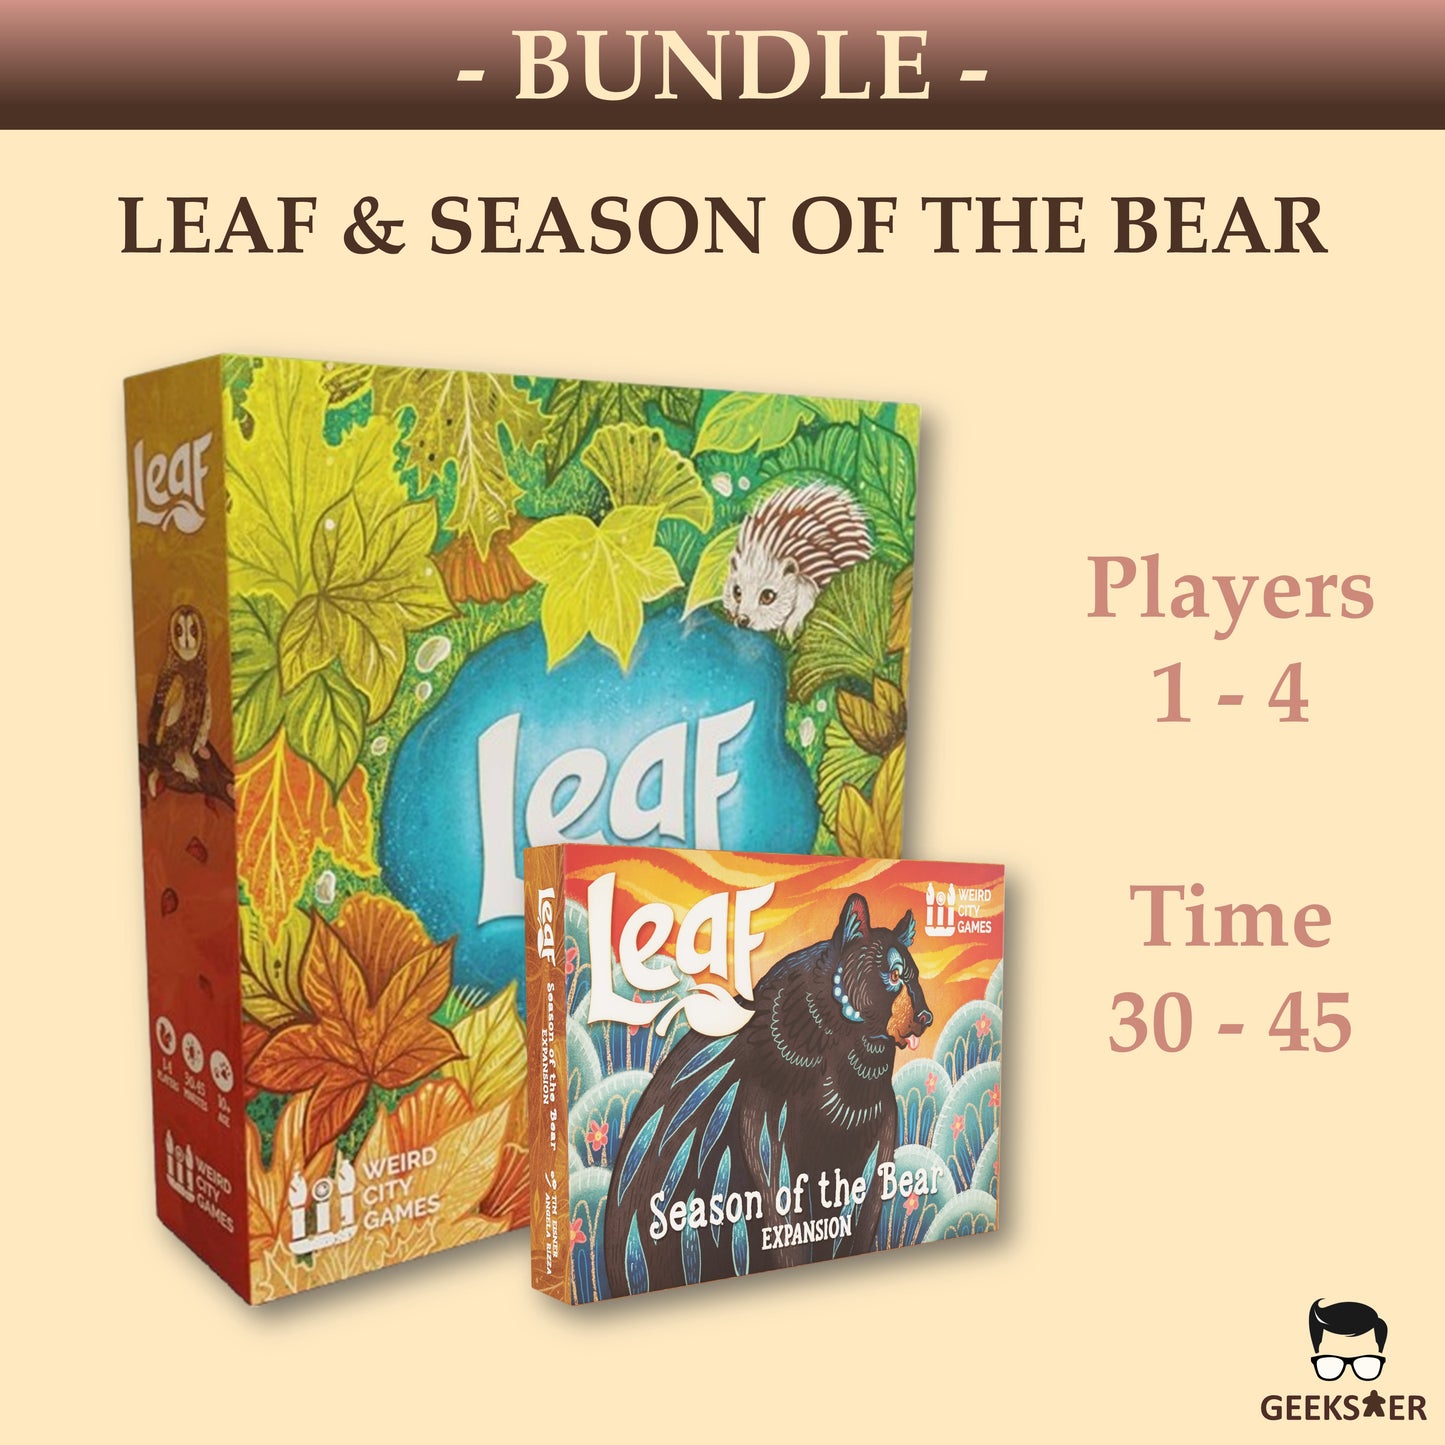 Leaf & Season of the Bear